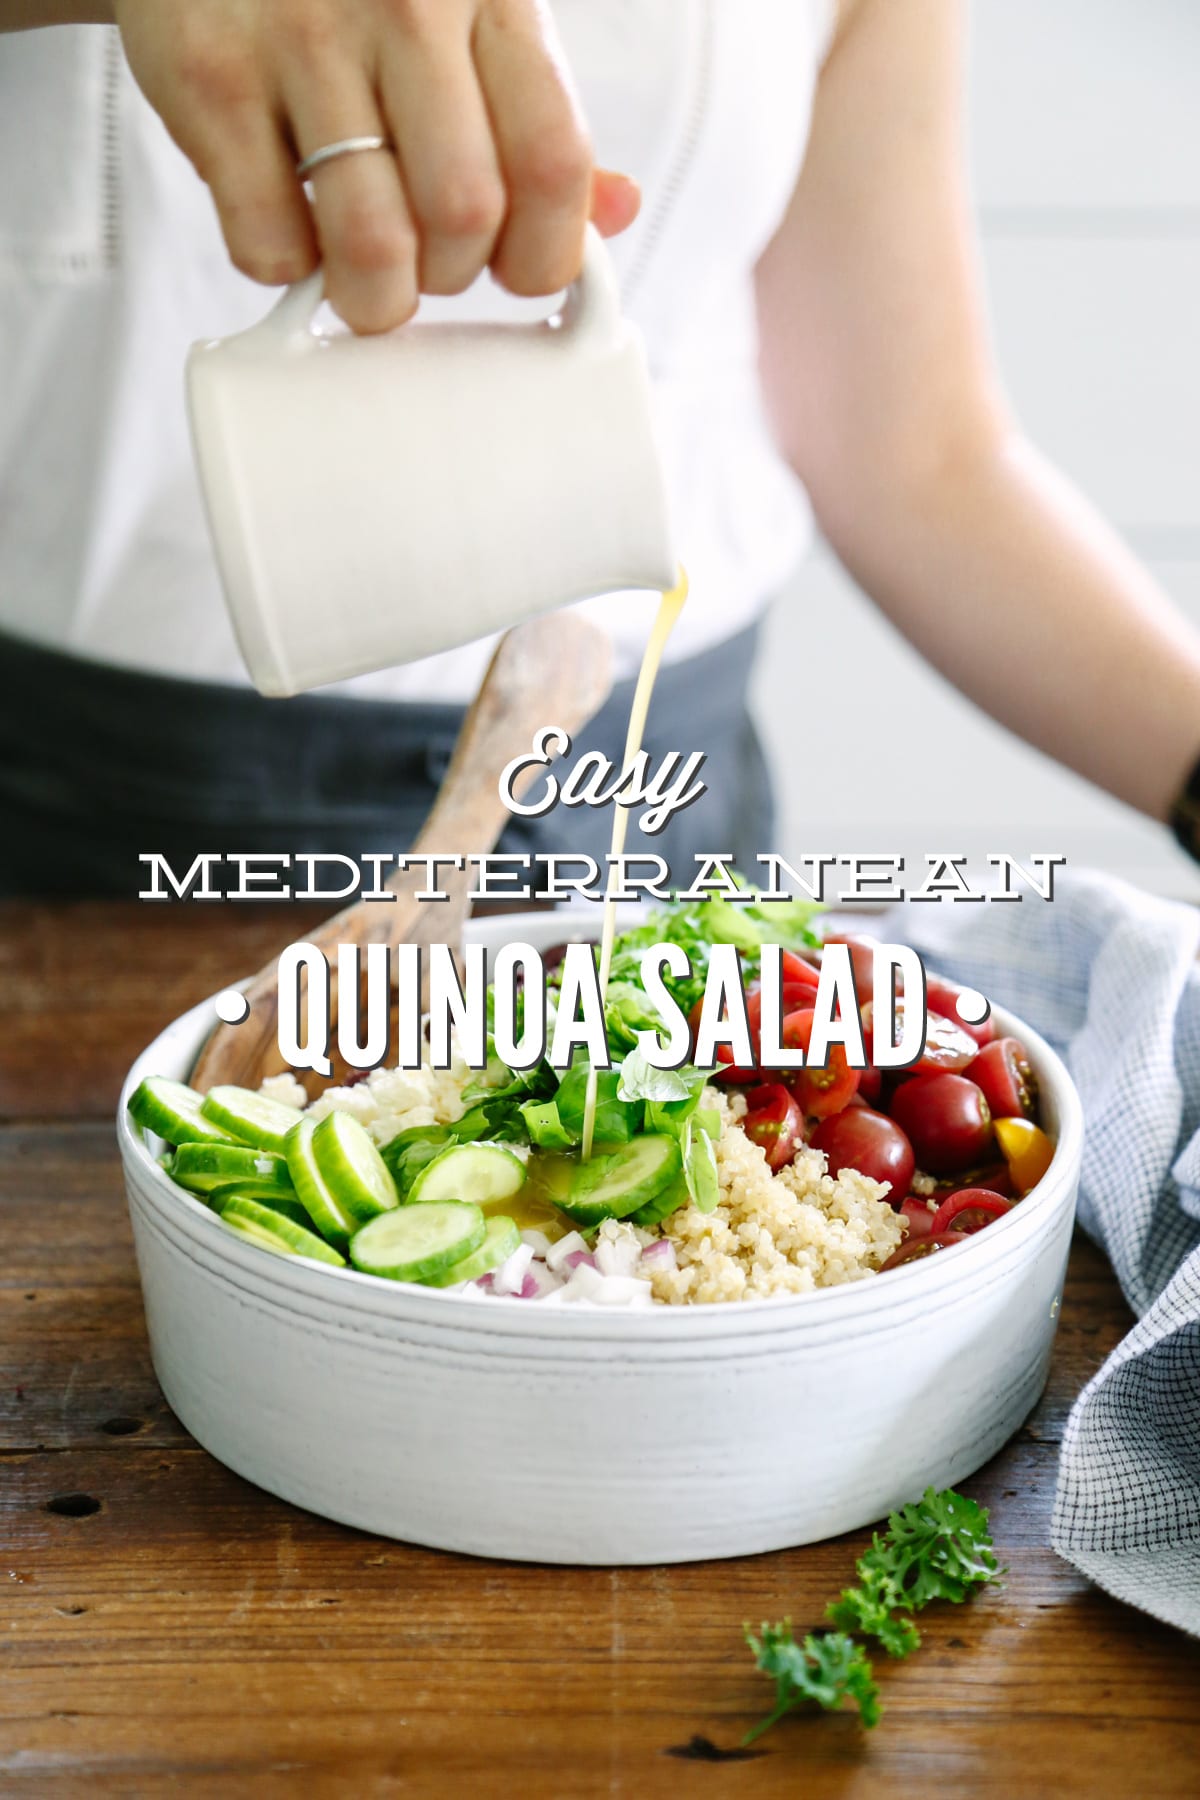 Easy Mediterranean Quinoa Salad